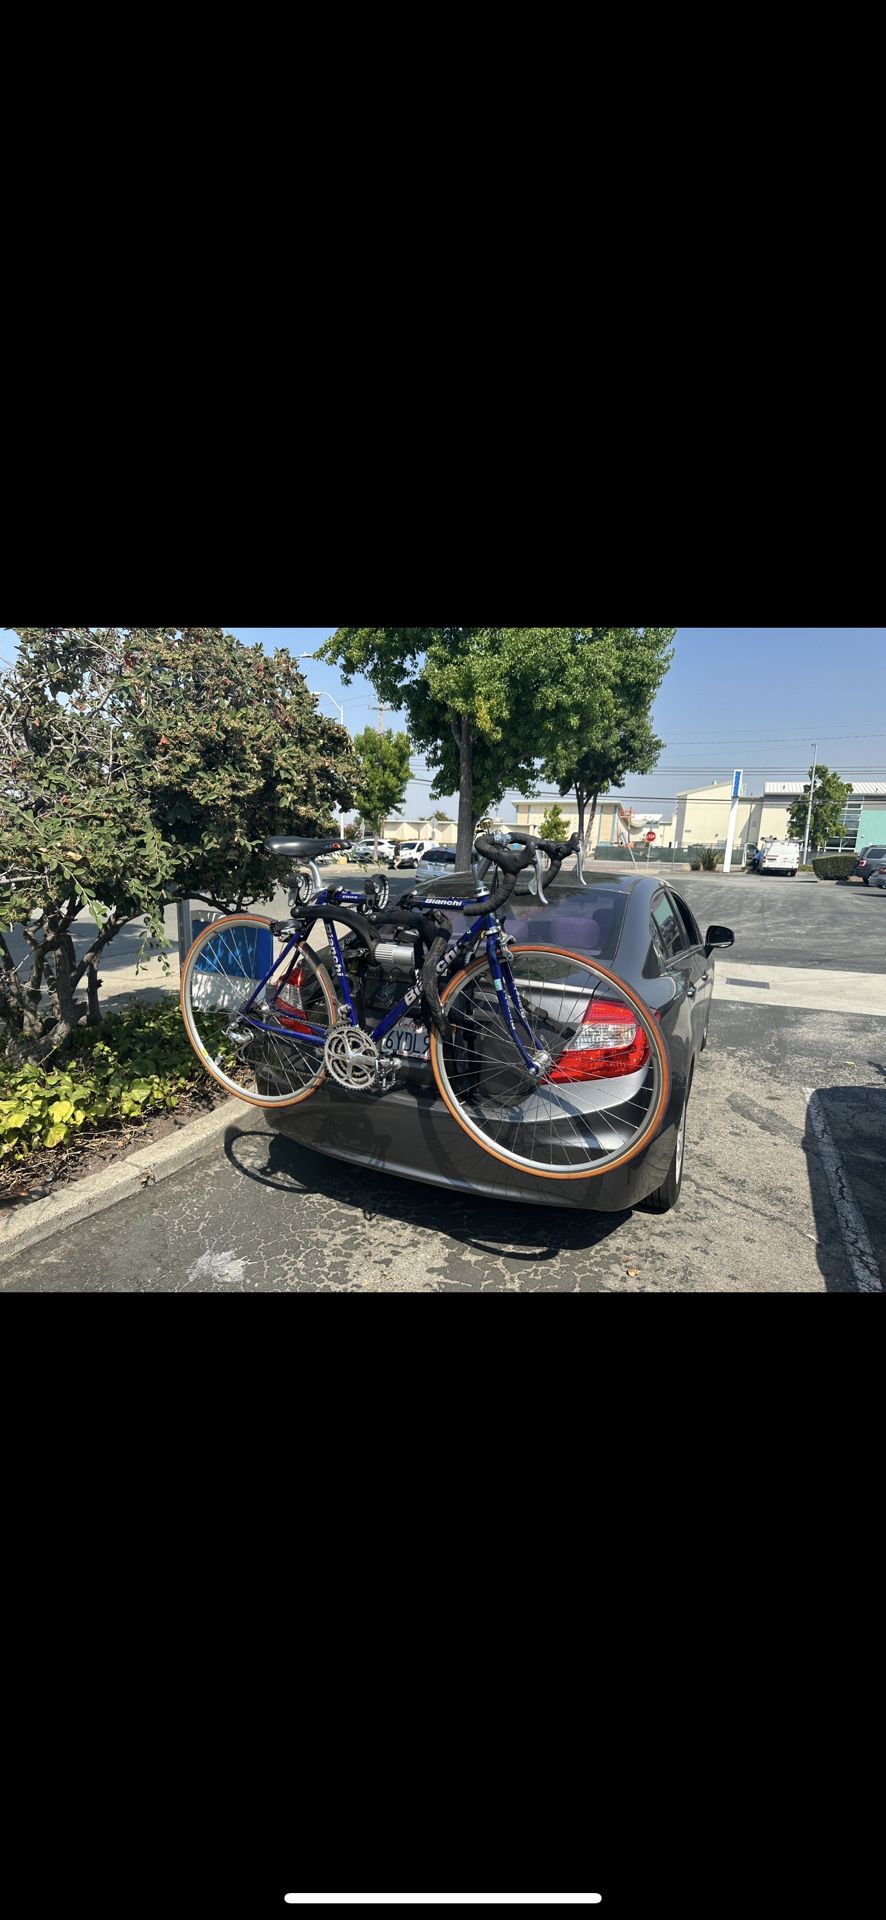 Saris Bike Rack 